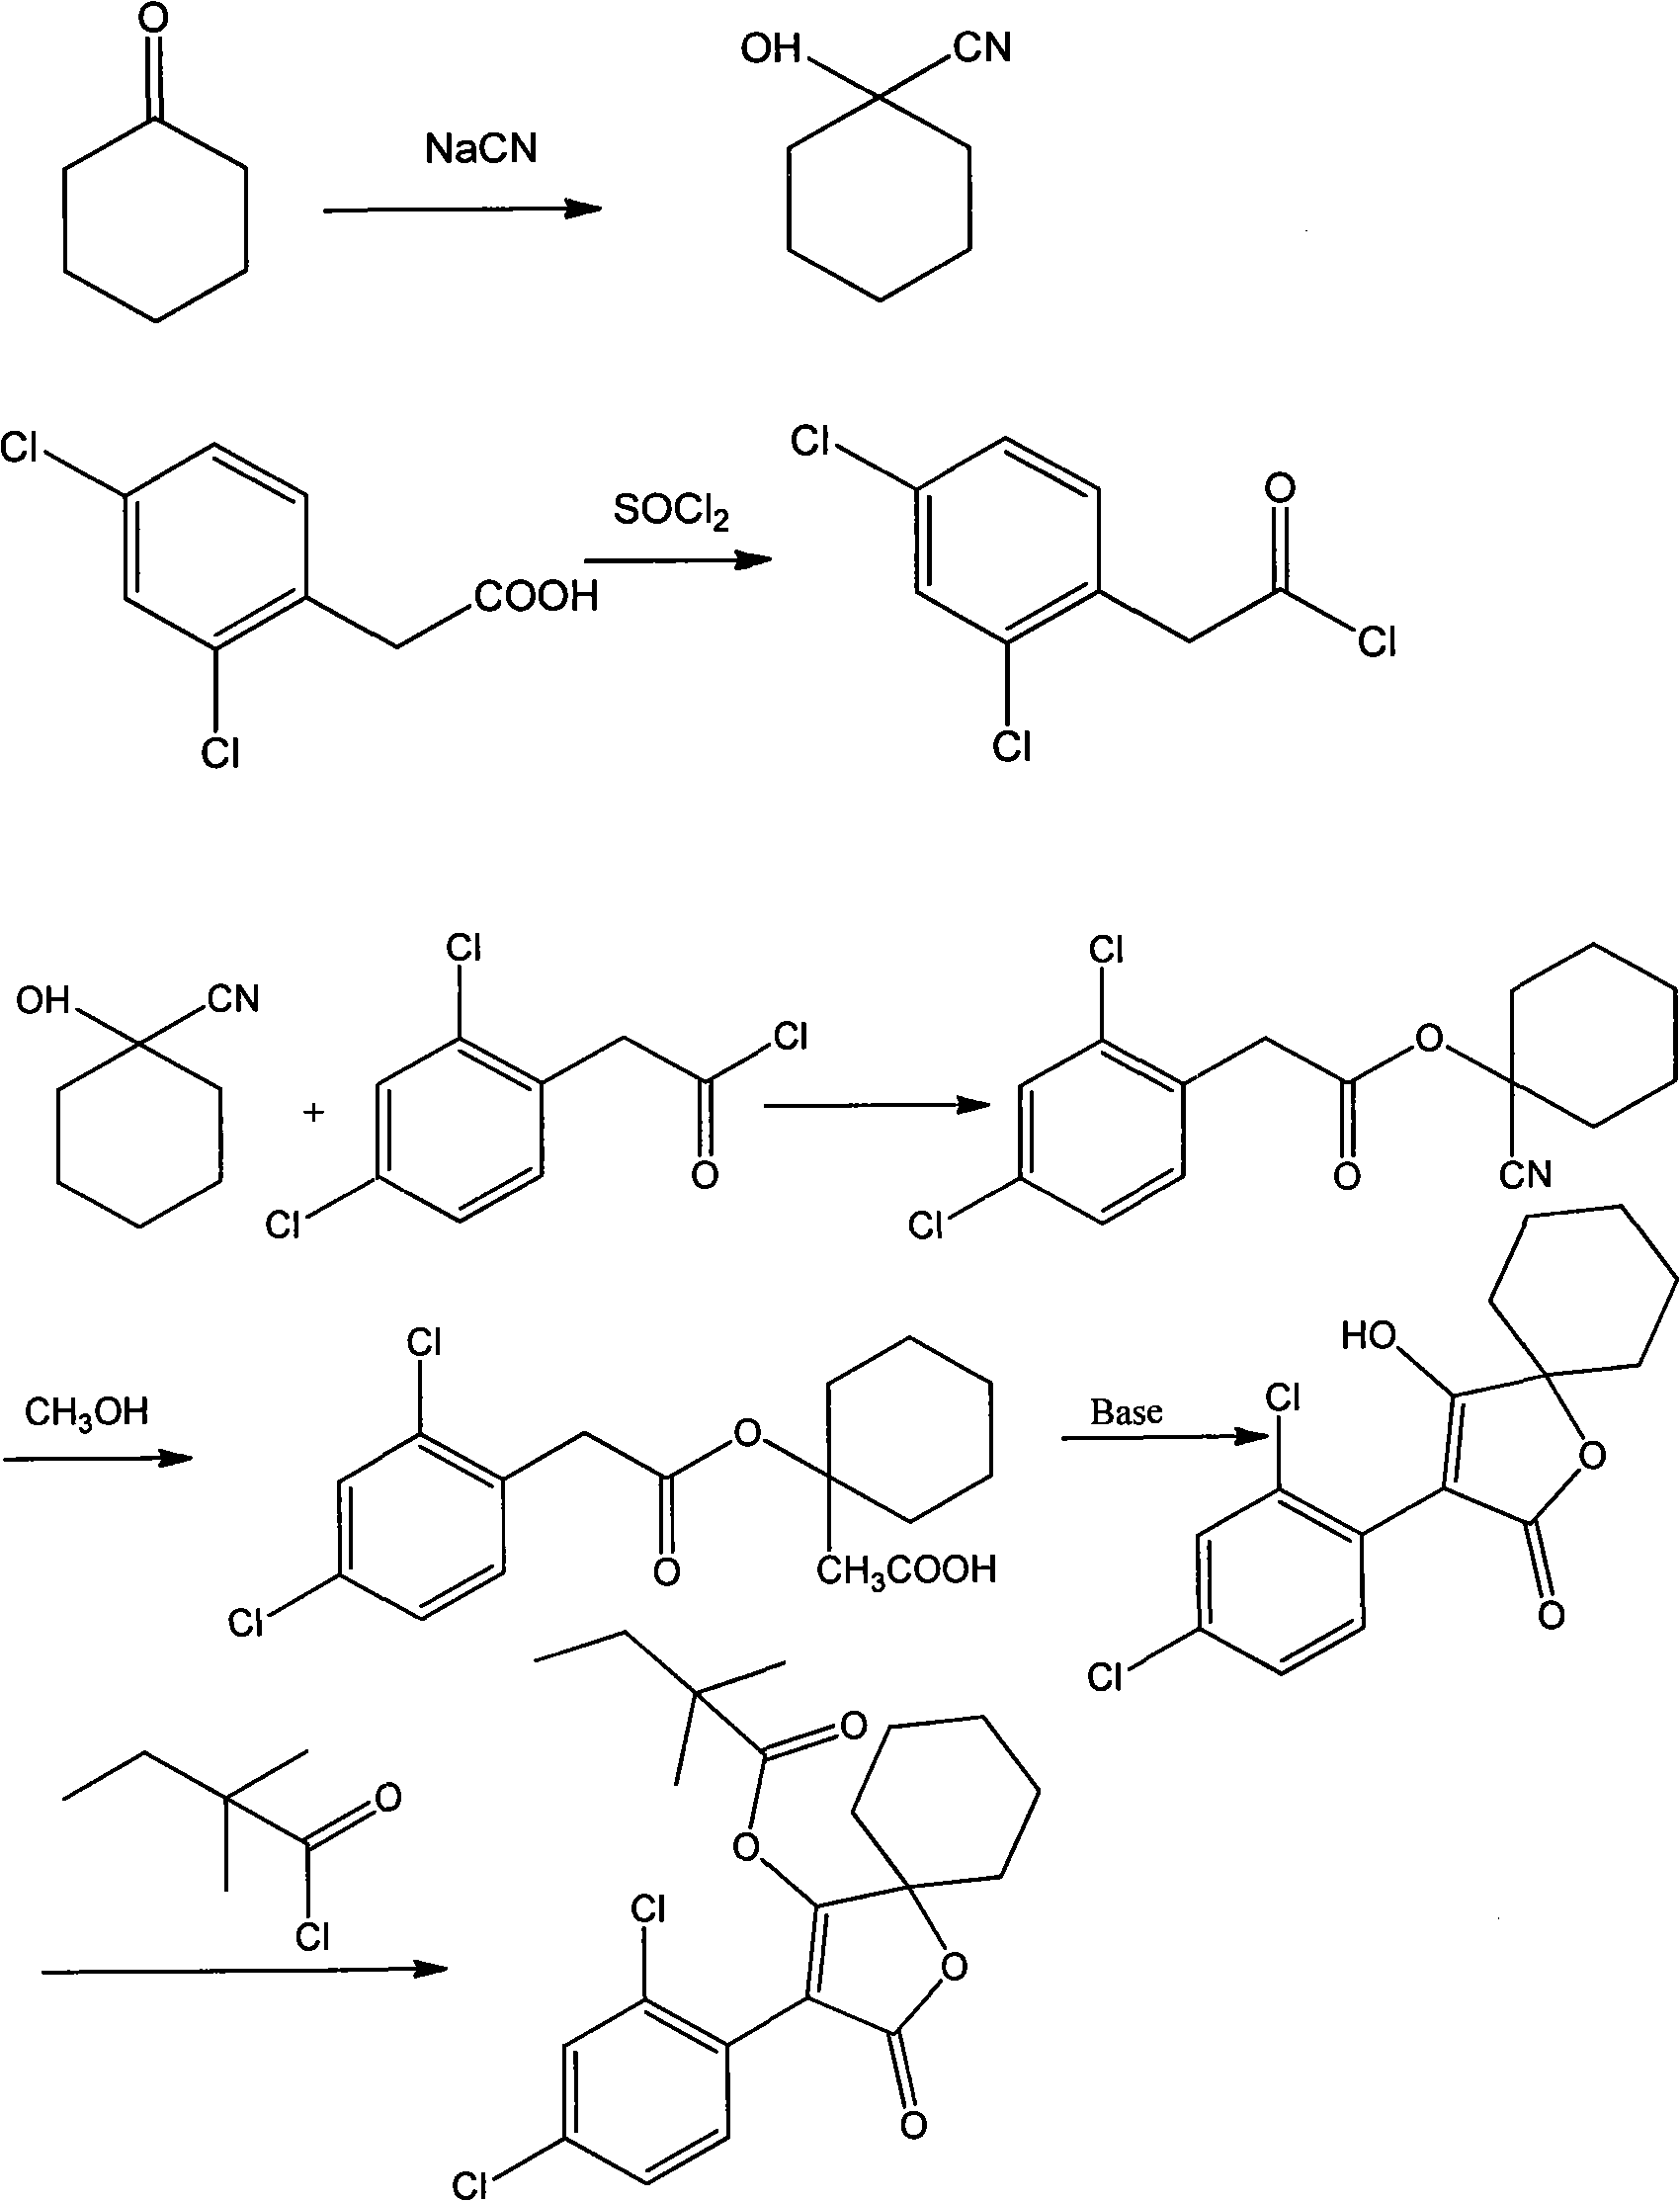 Production method for spirodiclofen